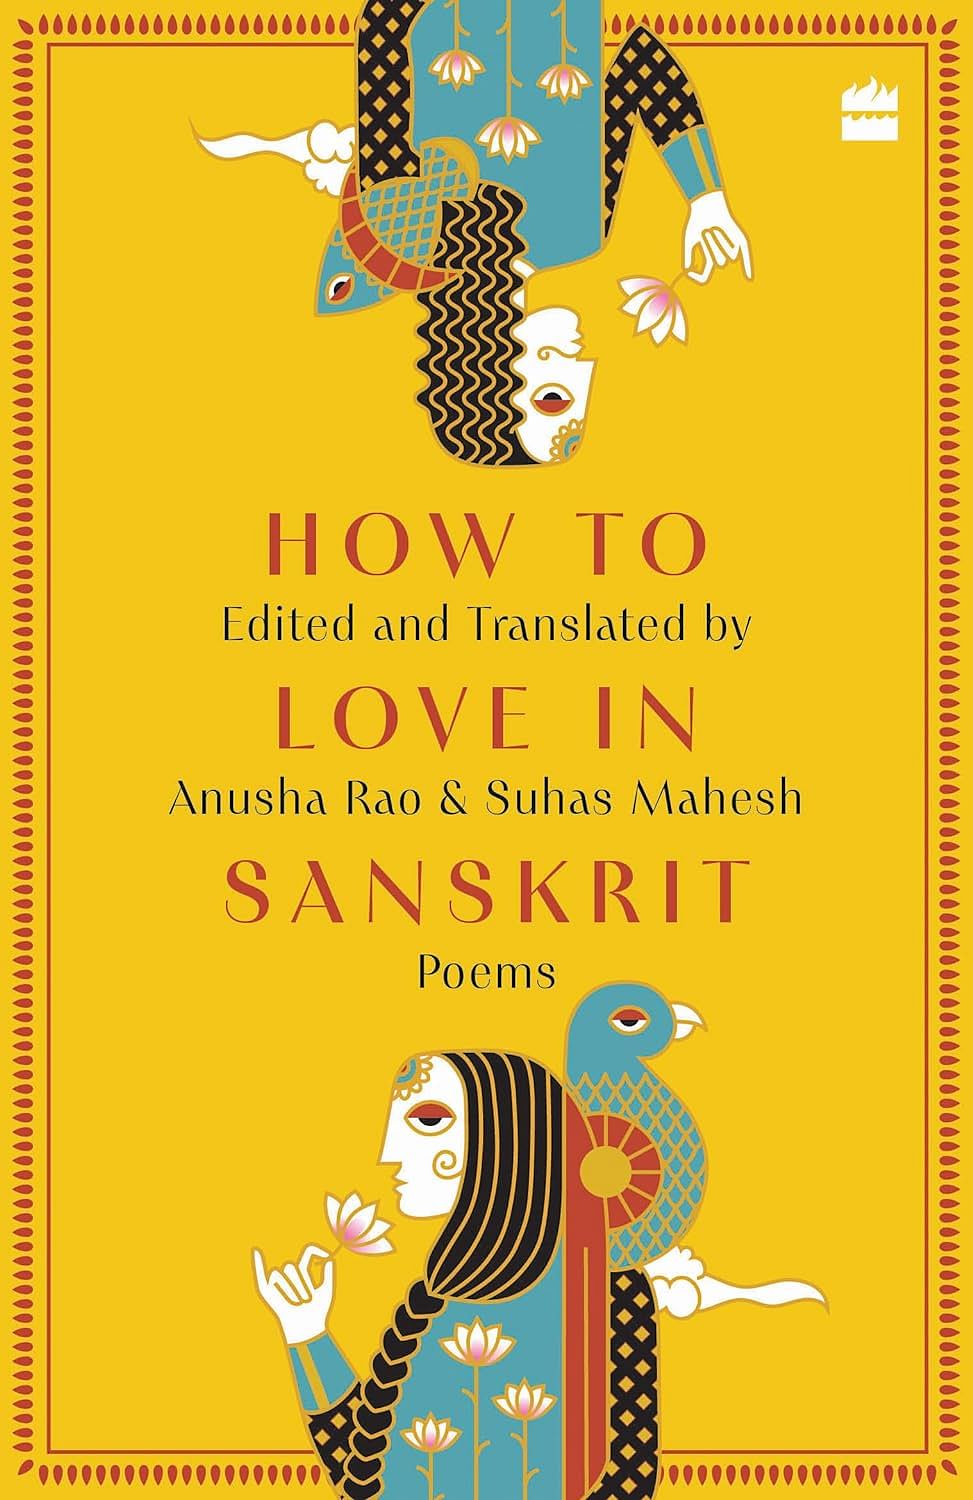 <div class="paragraphs"><p>How To Love In Sanskrit</p></div>